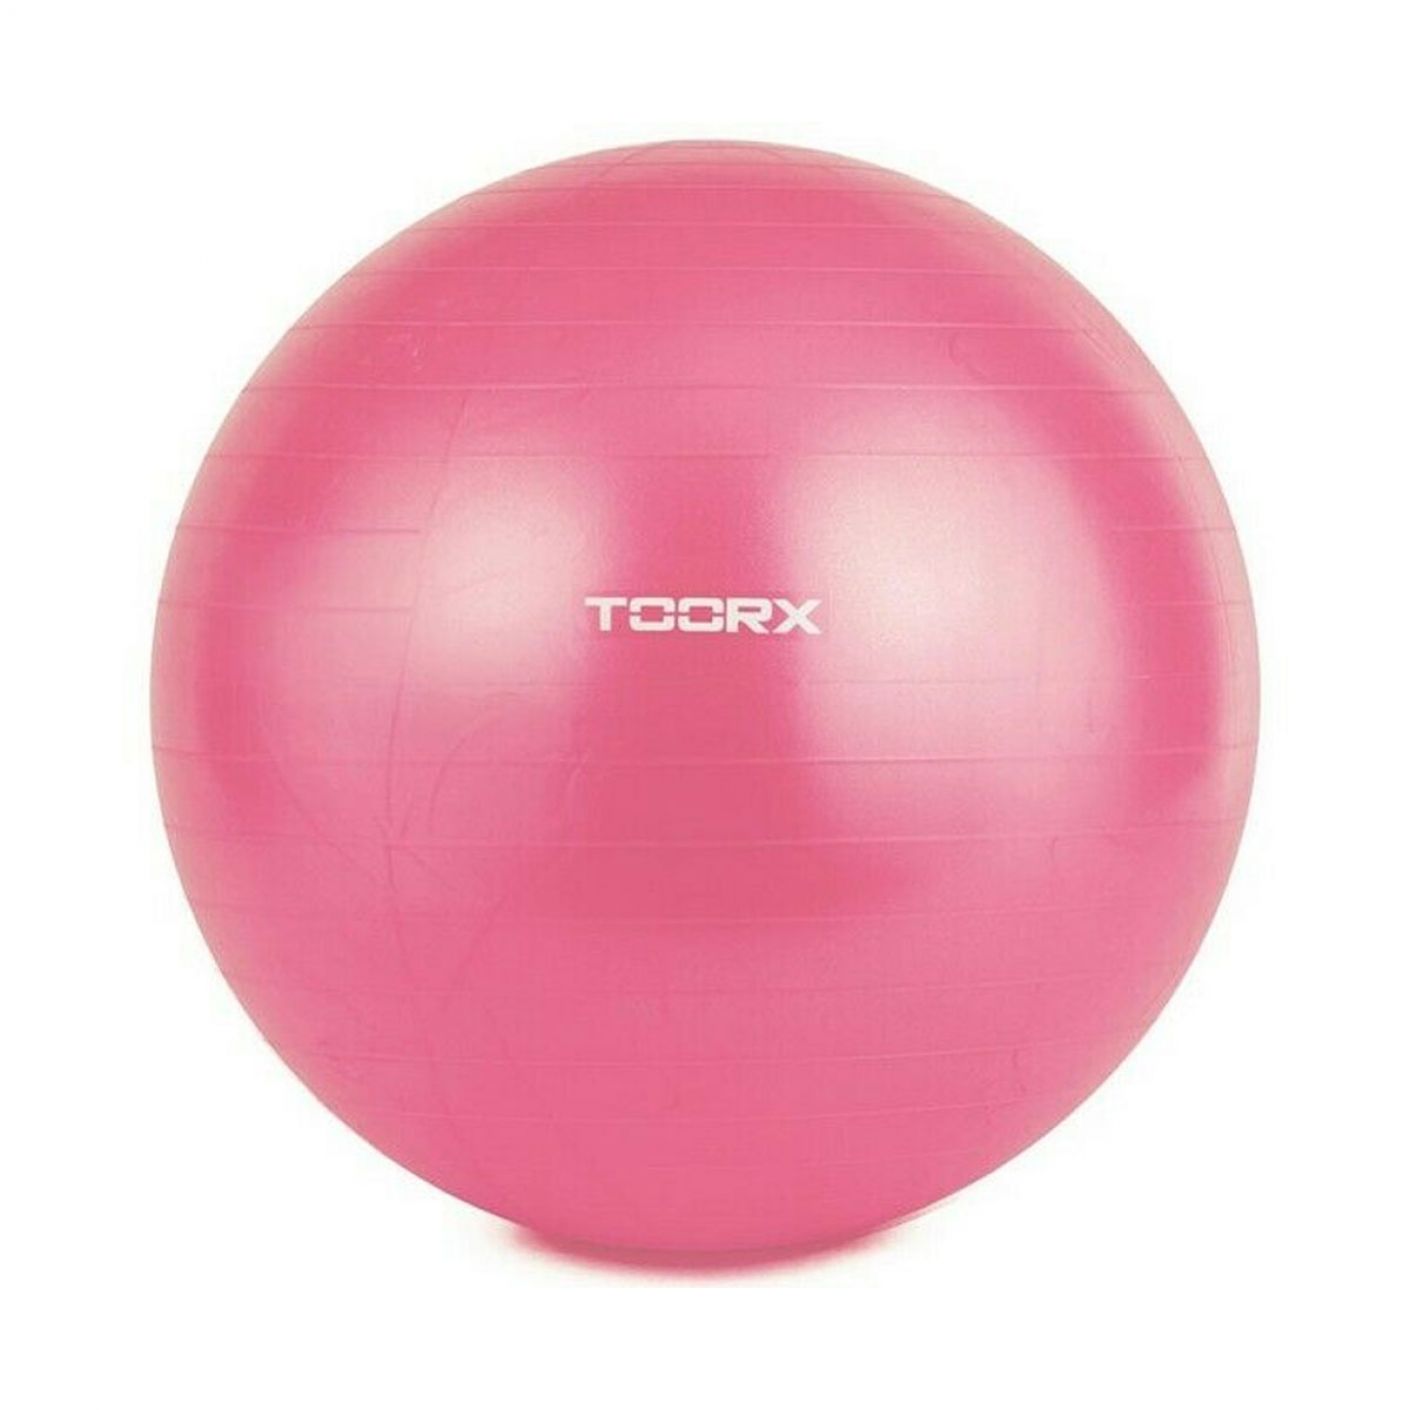 Toorx Gymnastic ball Ø 55 cm. pump included